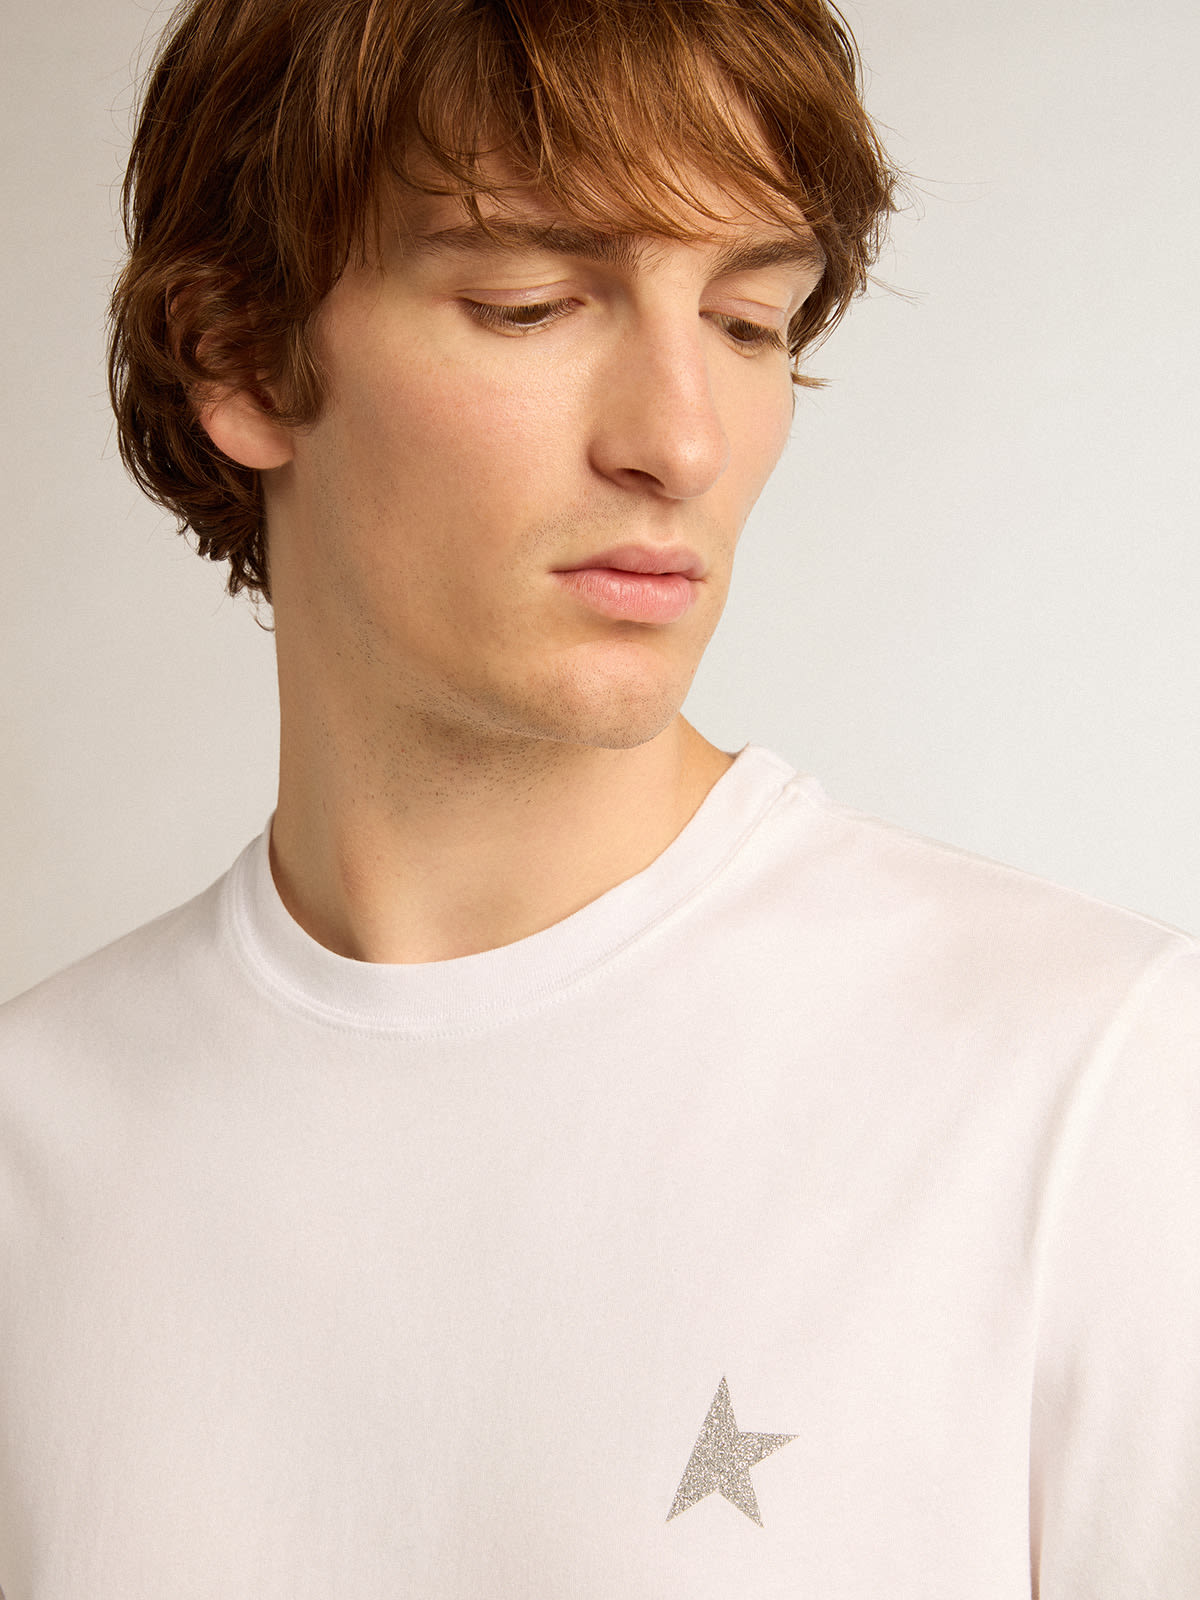 Golden Goose - Camiseta masculina branca com estrela de glitter prateado na frente in 